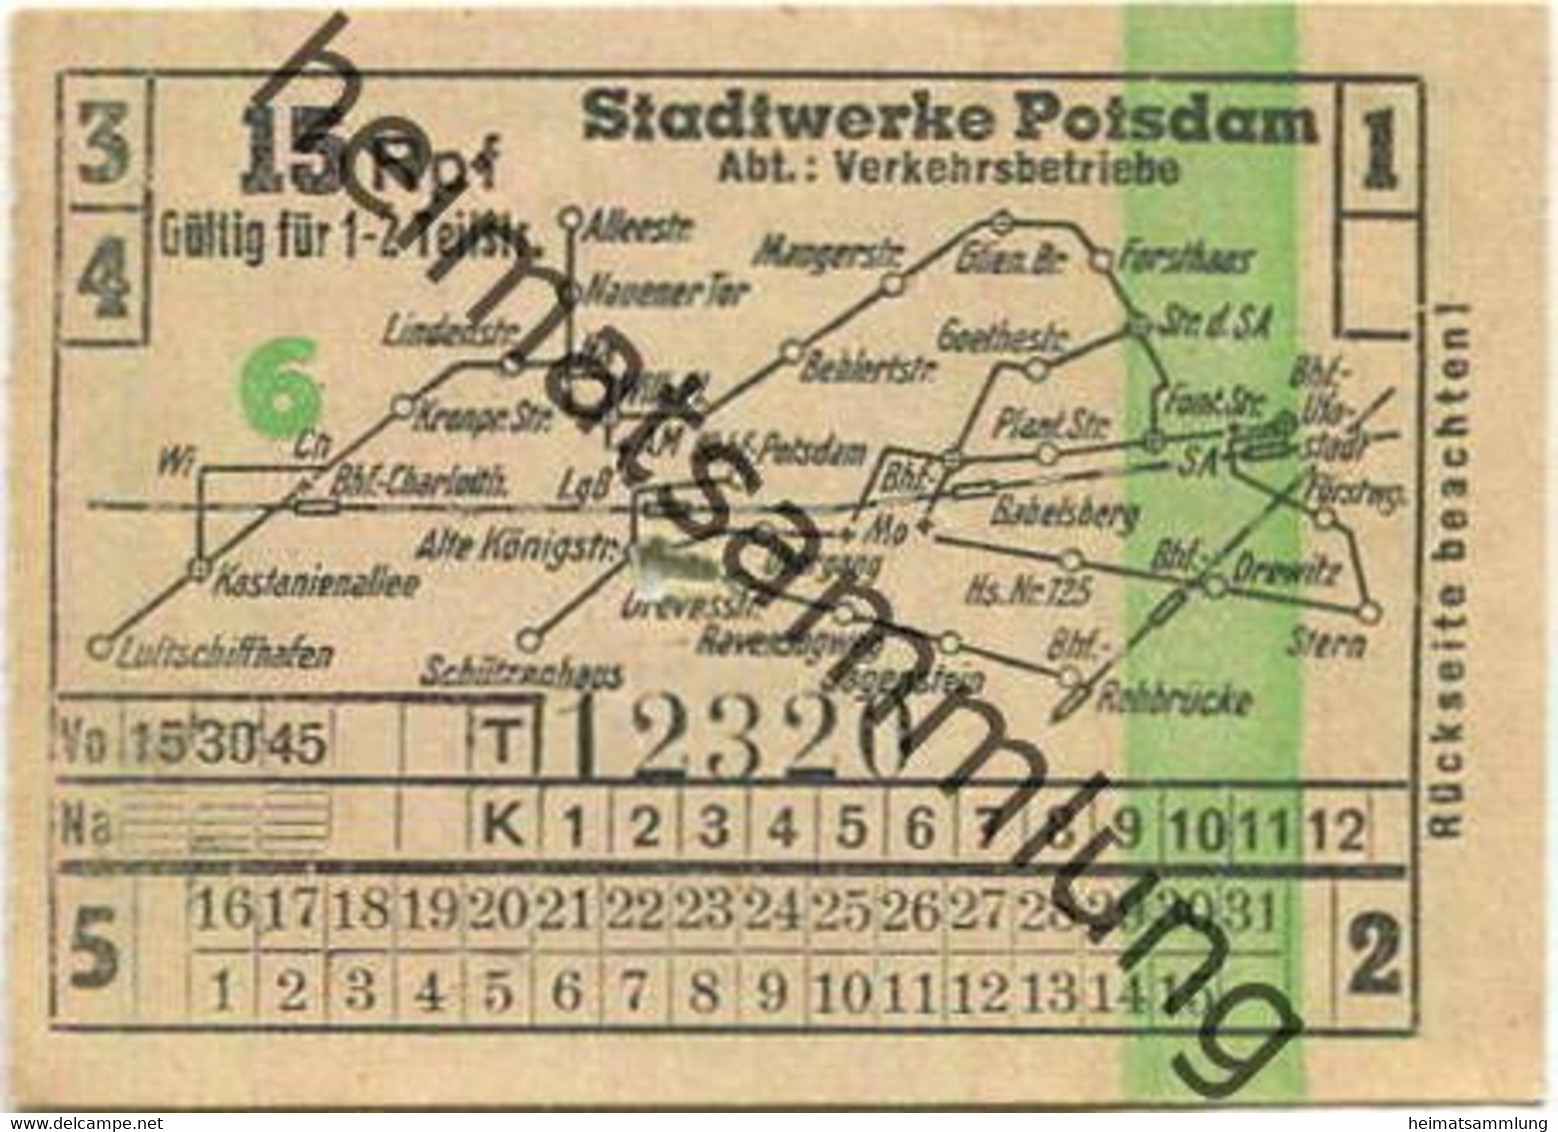 Deutschland - Potsdam - Stadtwerke Potsdam - Abt. Verkehrsbetriebe - Fahrschein 15Rpf. 1-2 Teilstrecken - Rückseitig Wer - Europa